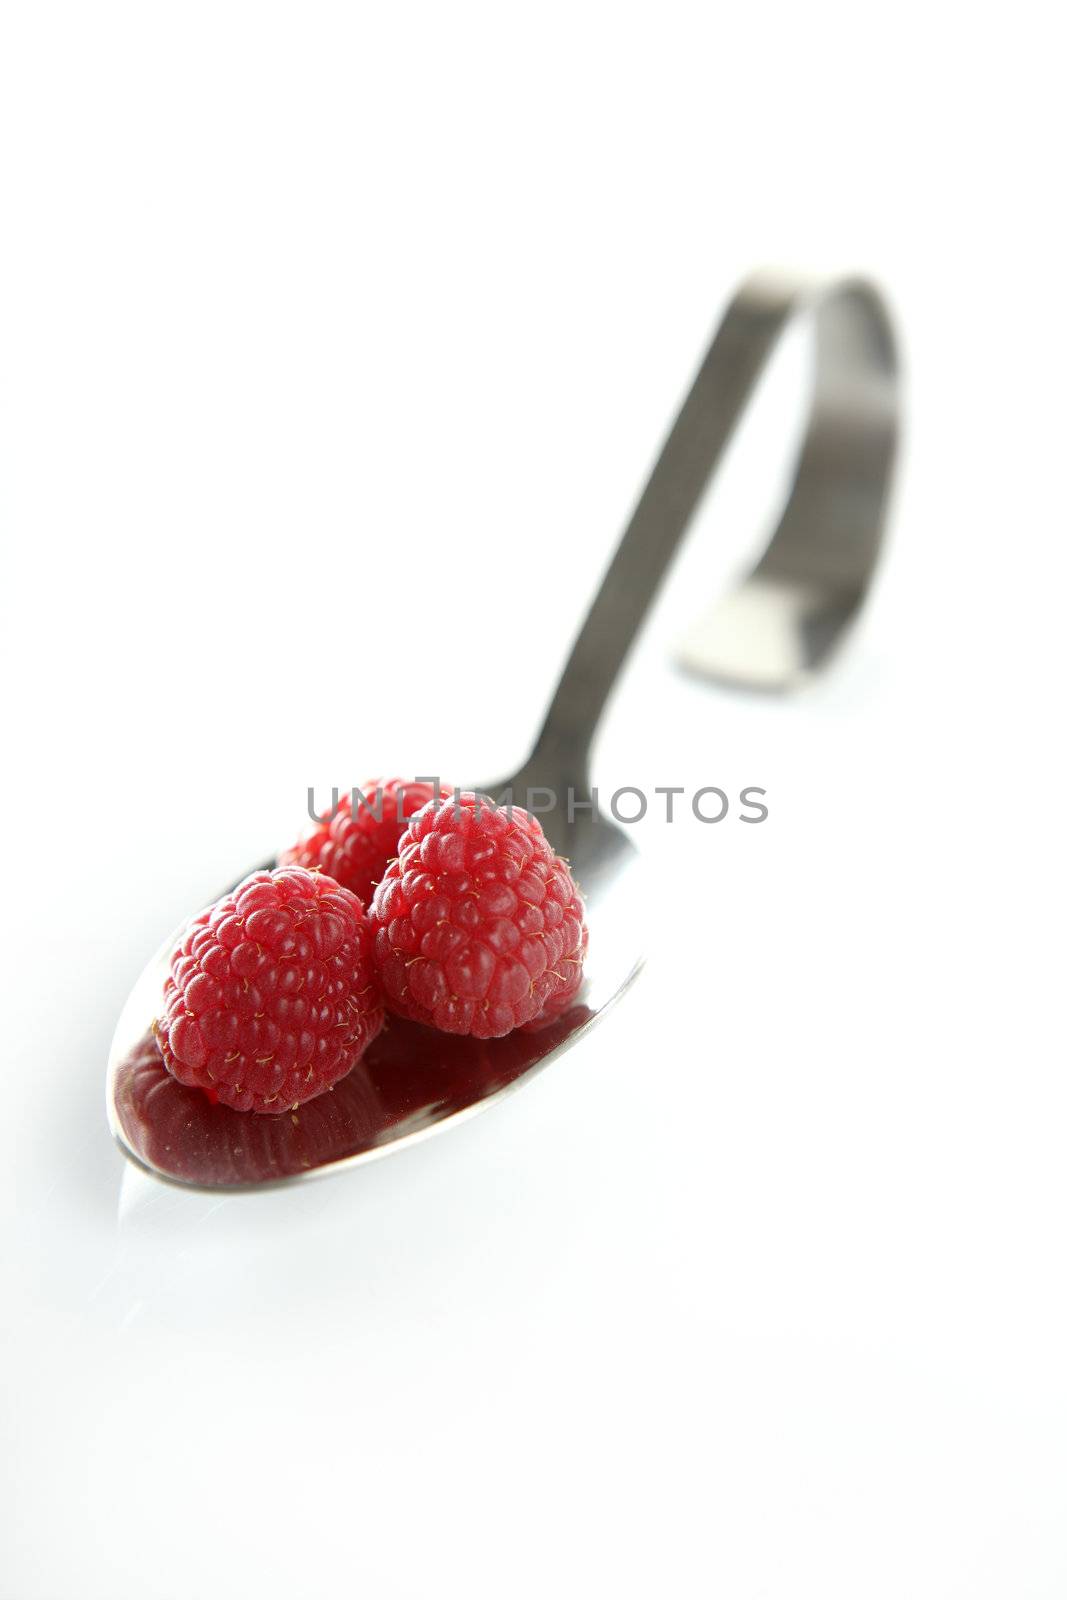 Raspberries in a spoon by lunamarina